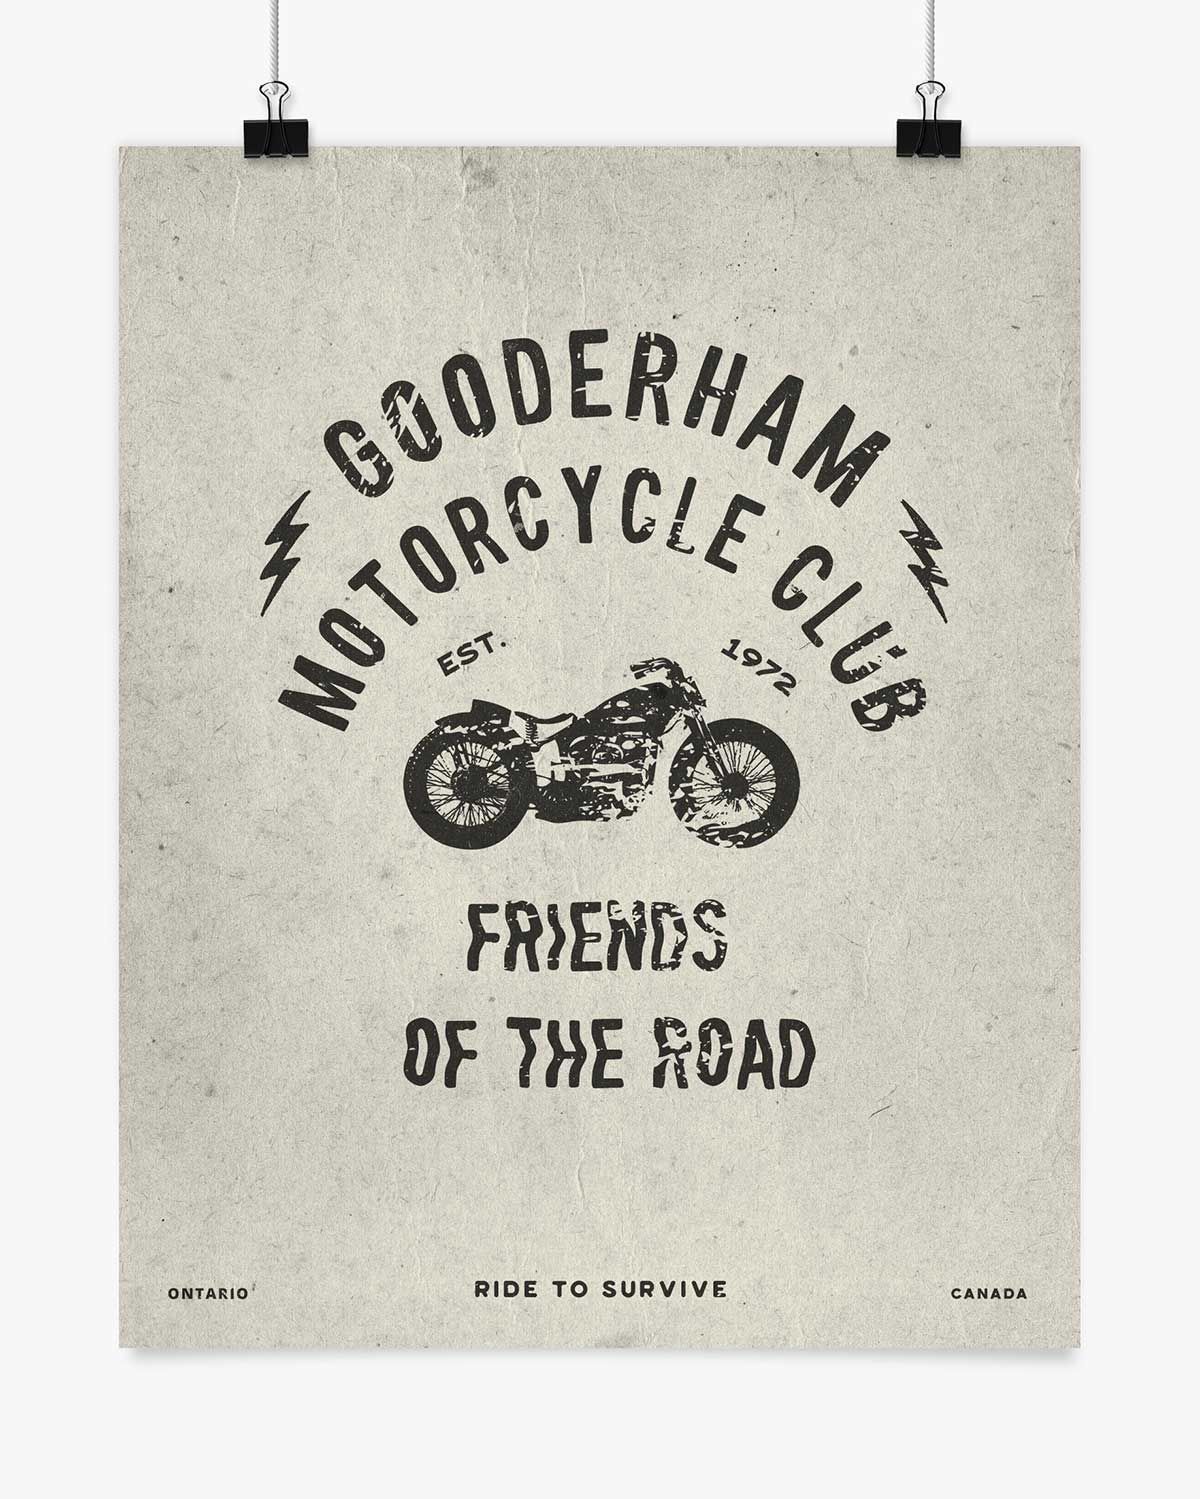 Motorcycle Club - Gooderham - Wall Art